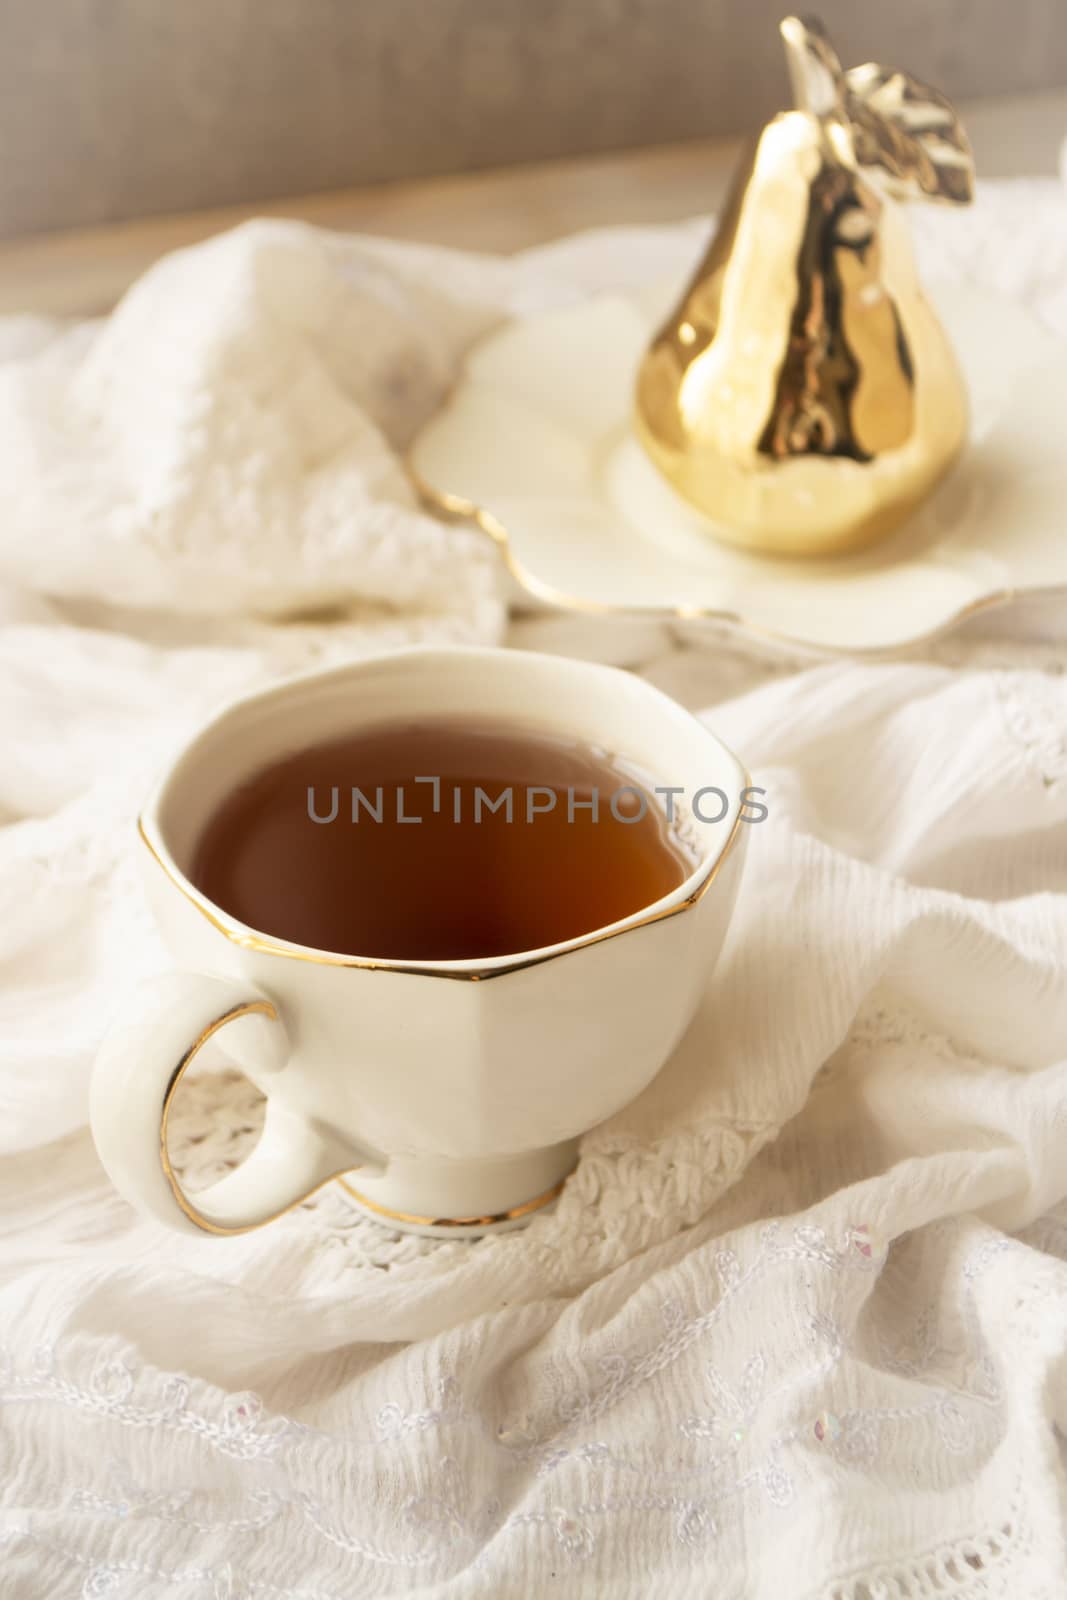 Afternoon tea in white vintage cup, vertical image